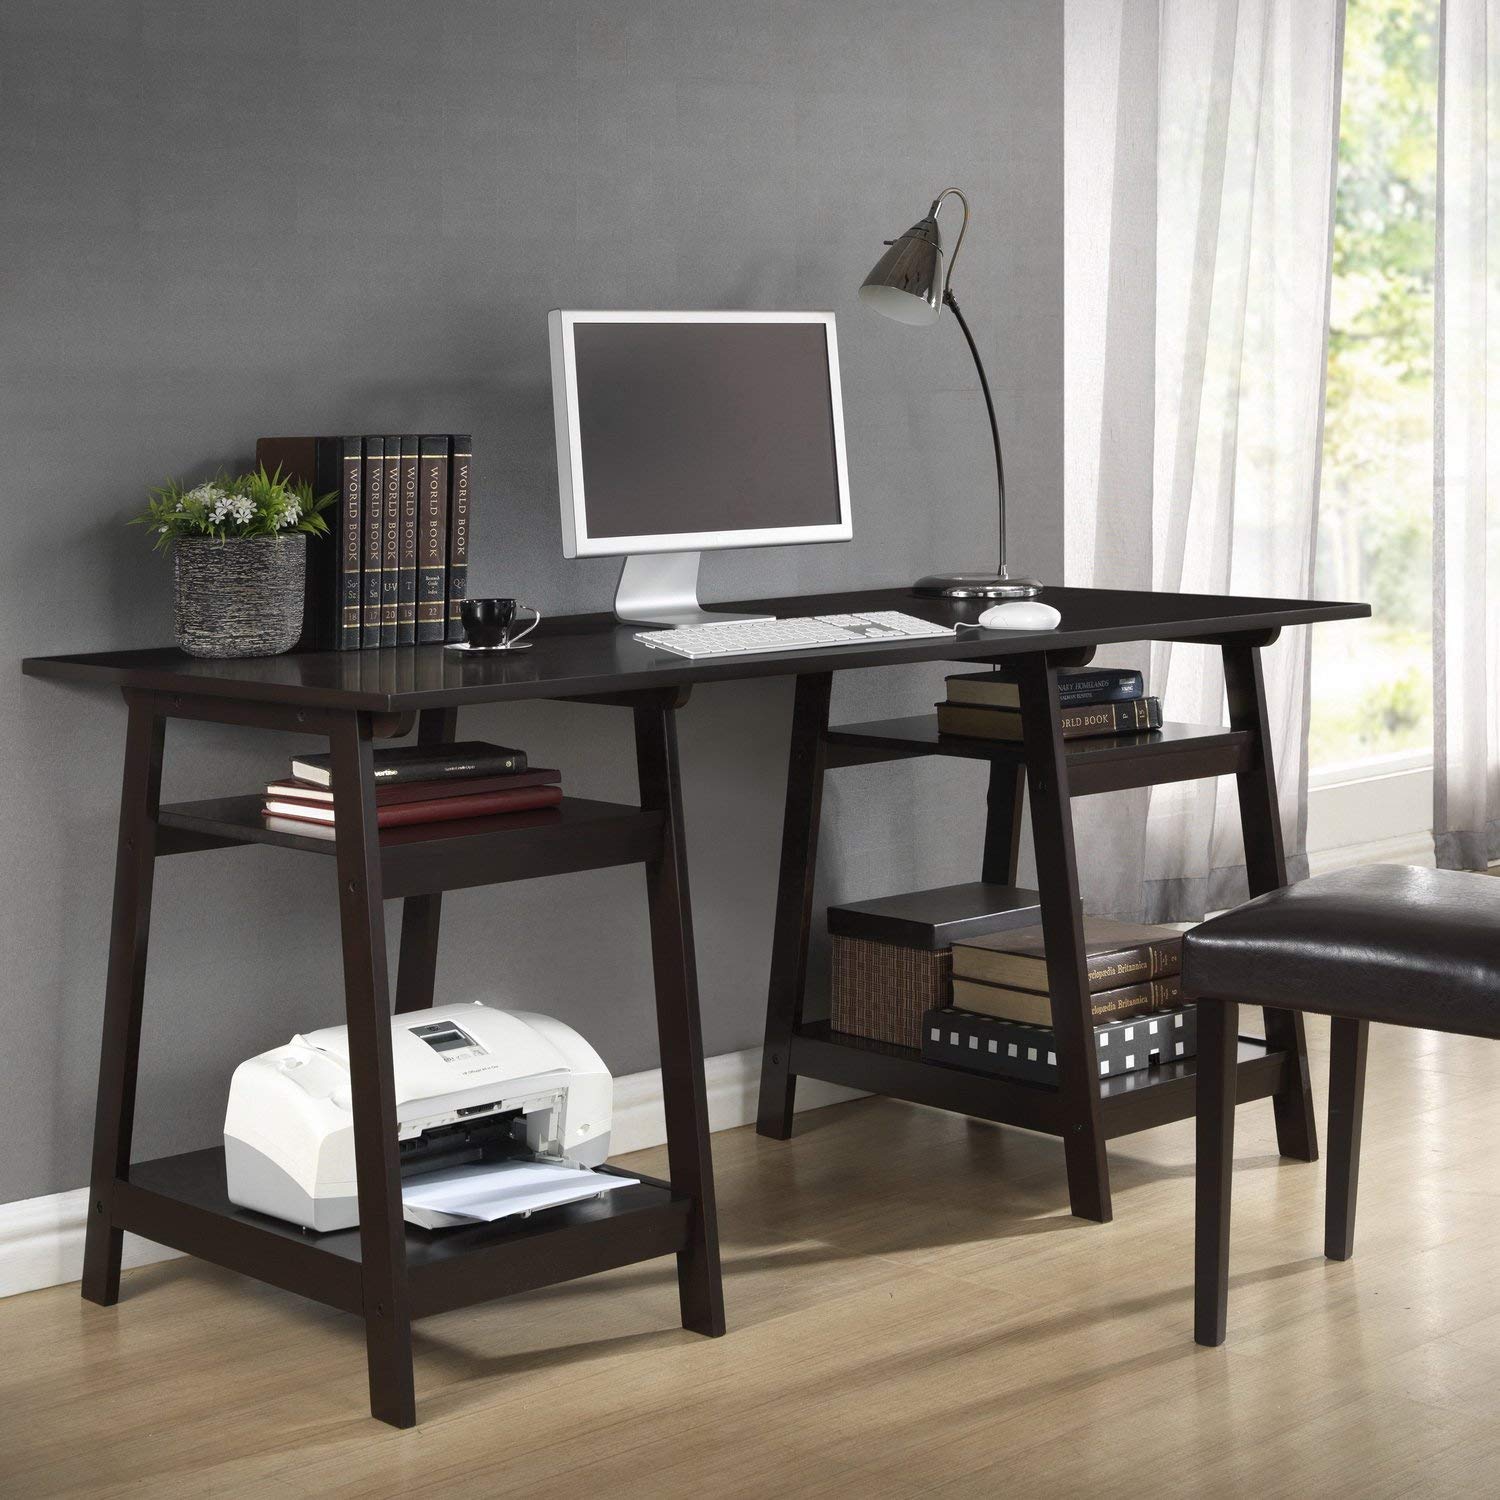 Amazon.com: Baxton Studio Mott Dark Brown Wood Modern Desk with ...